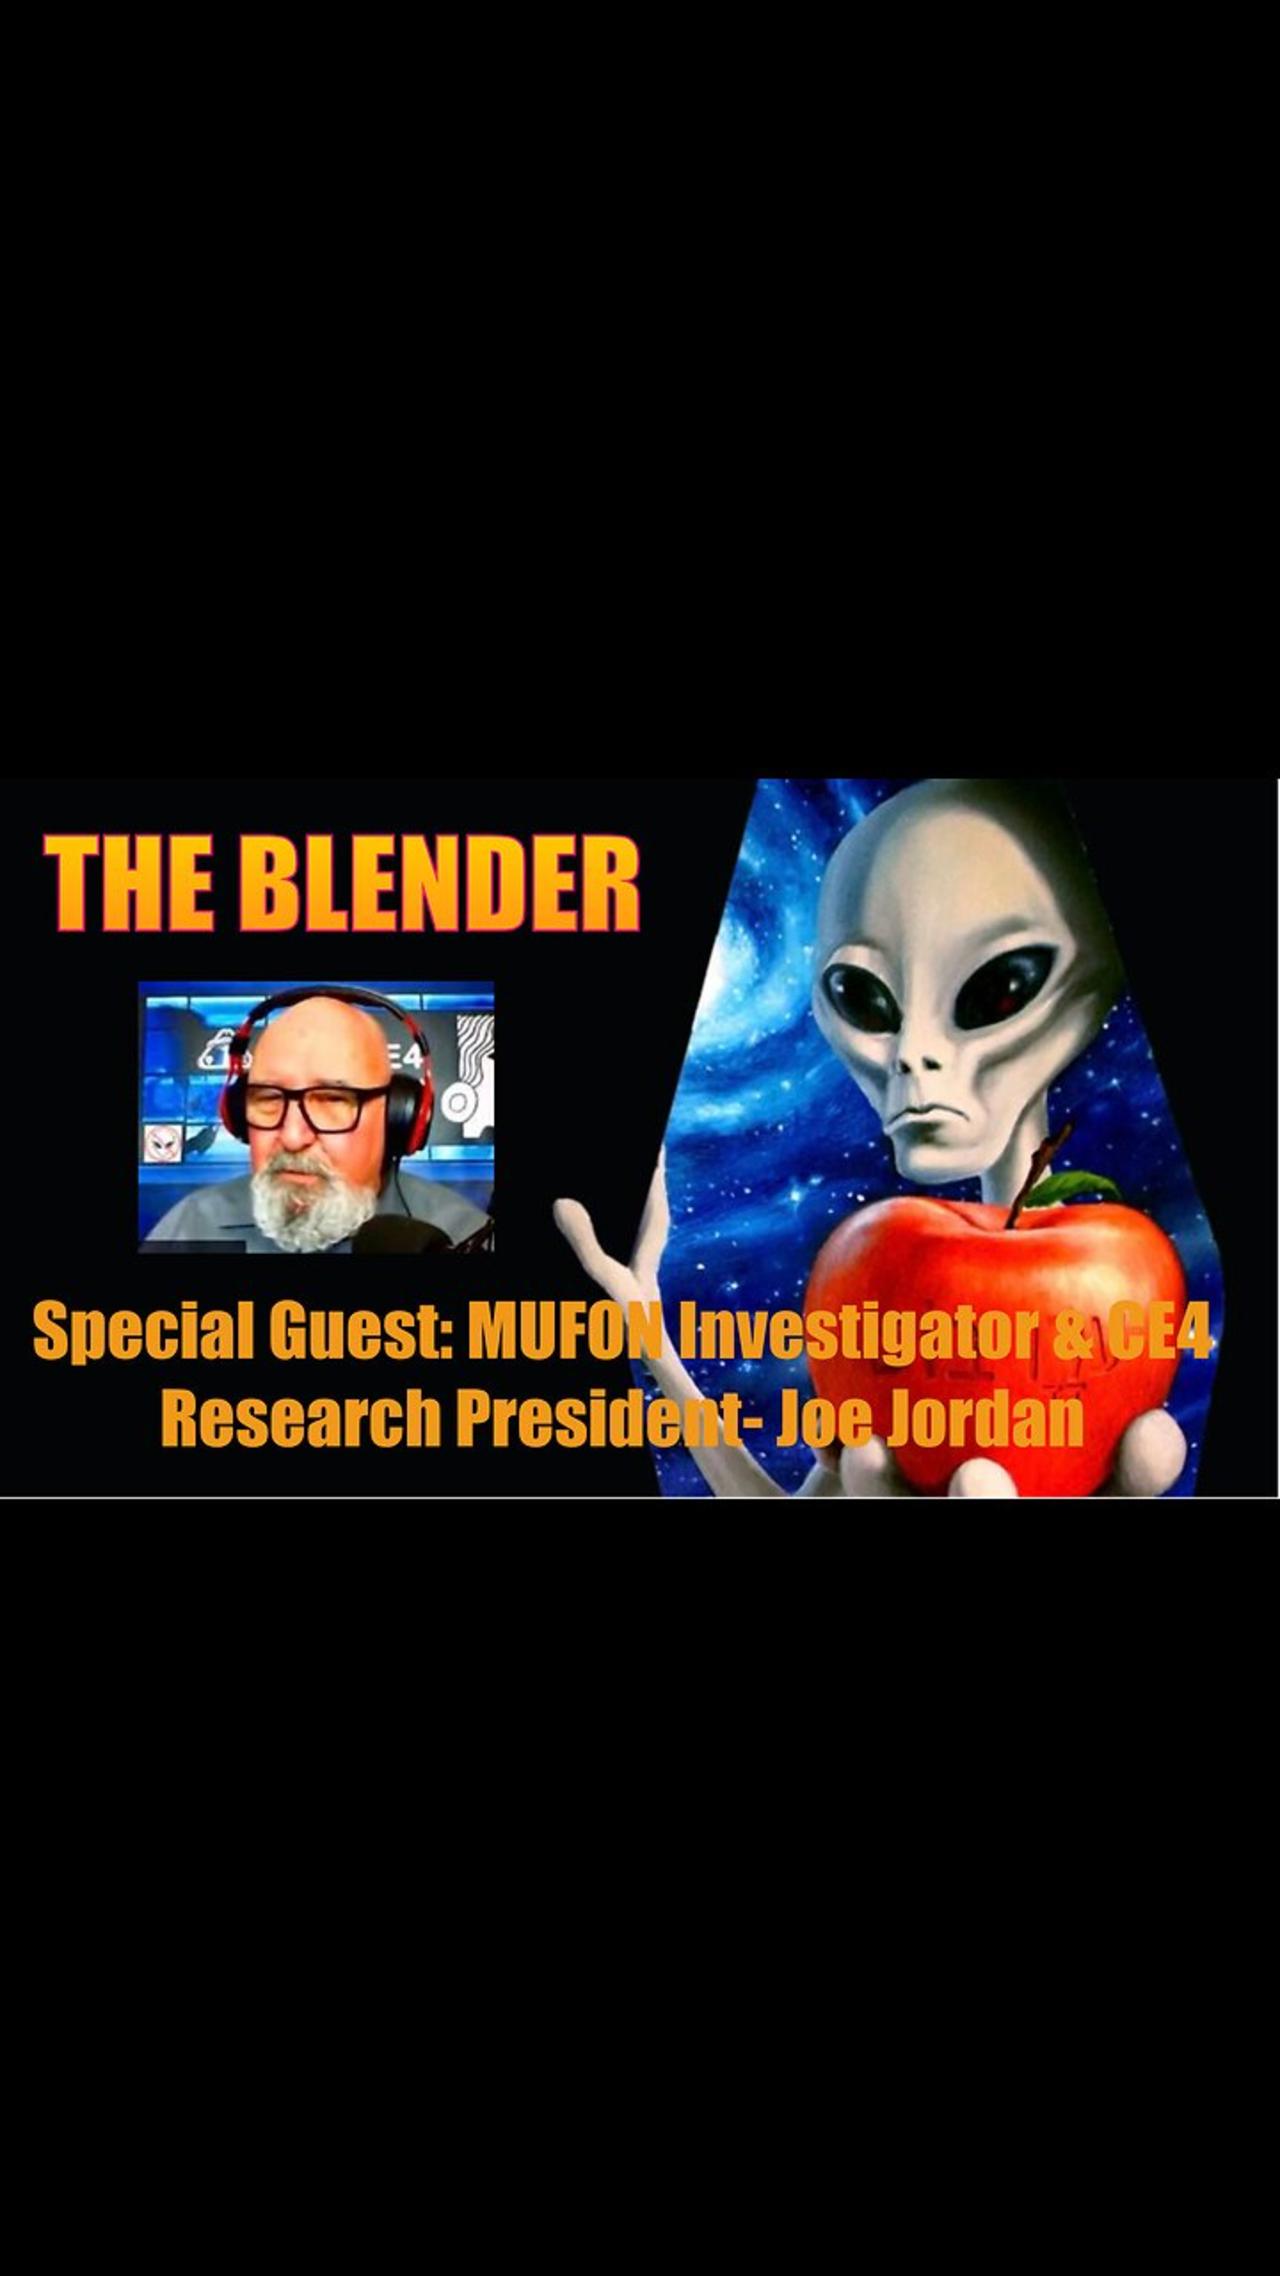 The Blender w/ Special Guest: MUFON Director & CE4 Research Founder - Joseph Jordan